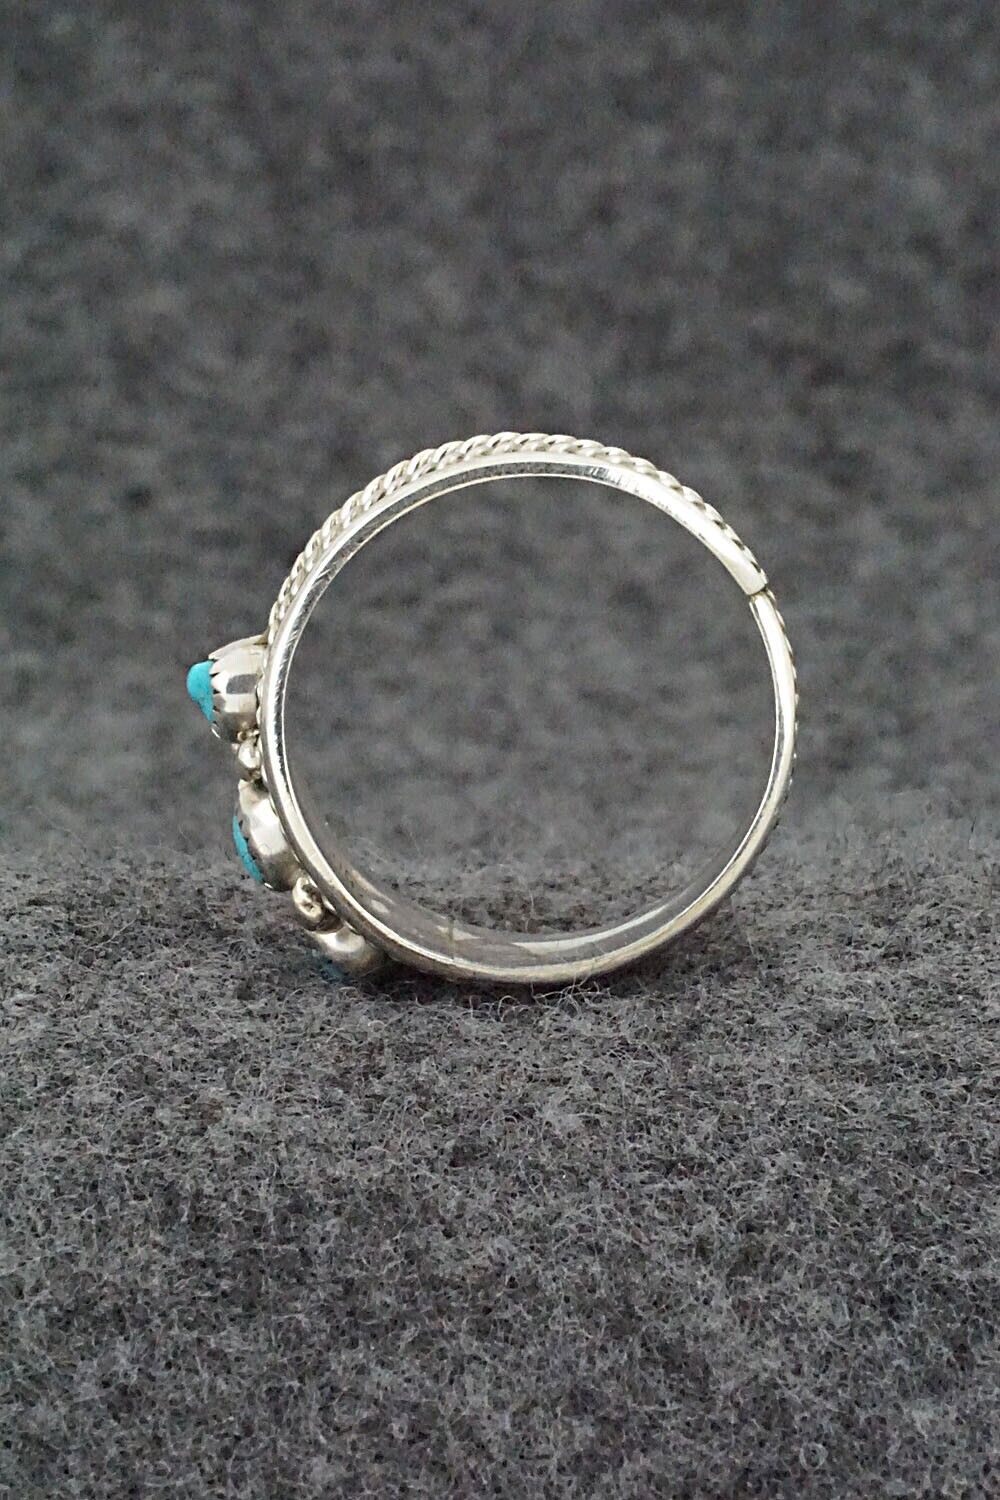 Turquoise & Sterling Silver Ring - Sondra Whitegoat - Size 11.5